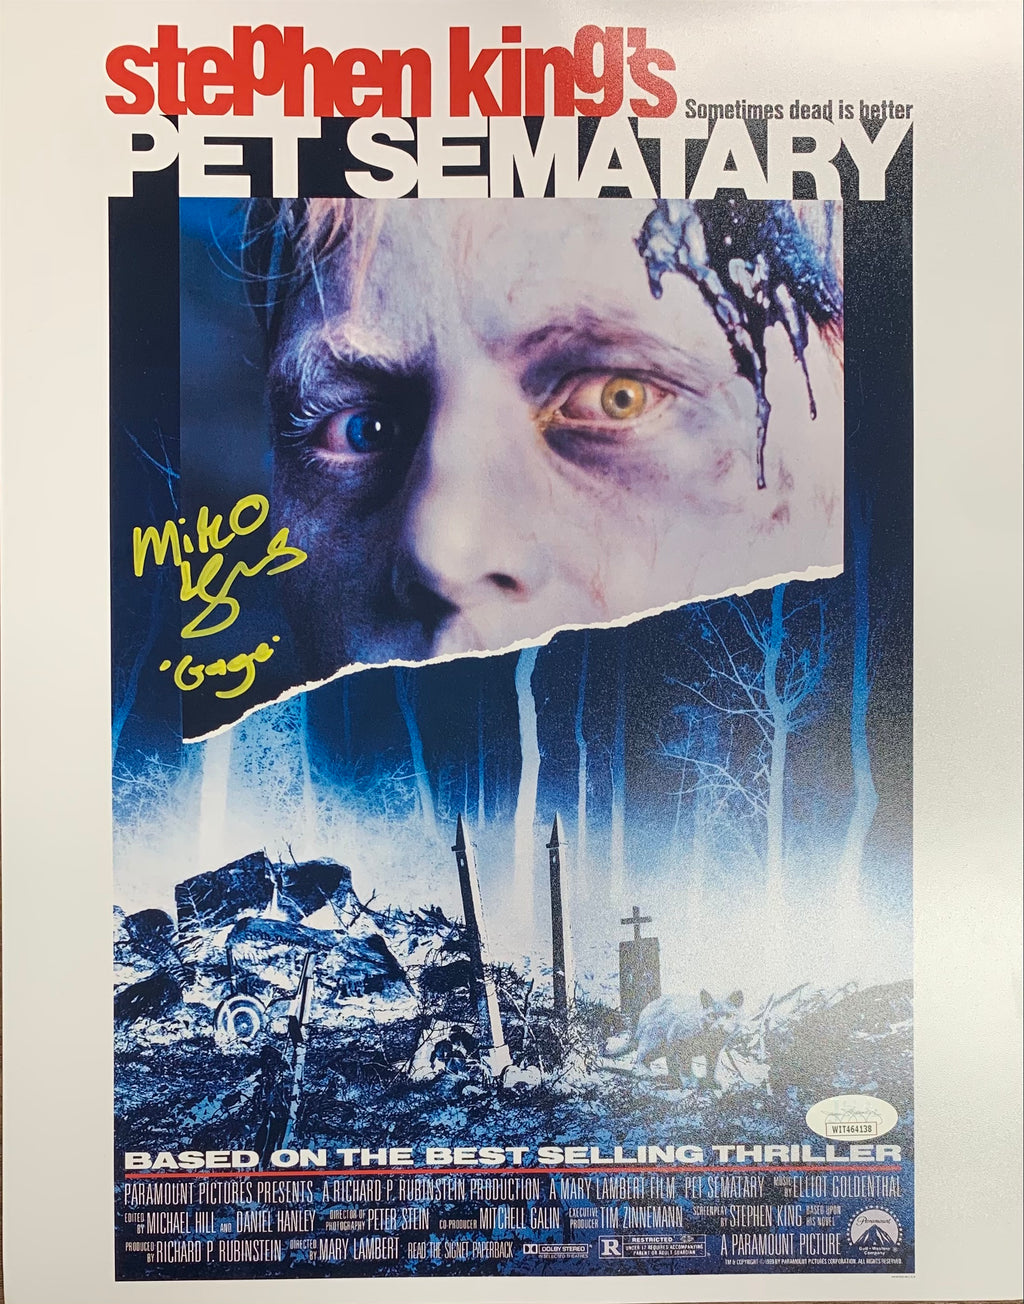 Miko Hughes autographed signed inscribed 11x14 photo Pet Sematary JSA COA Gage